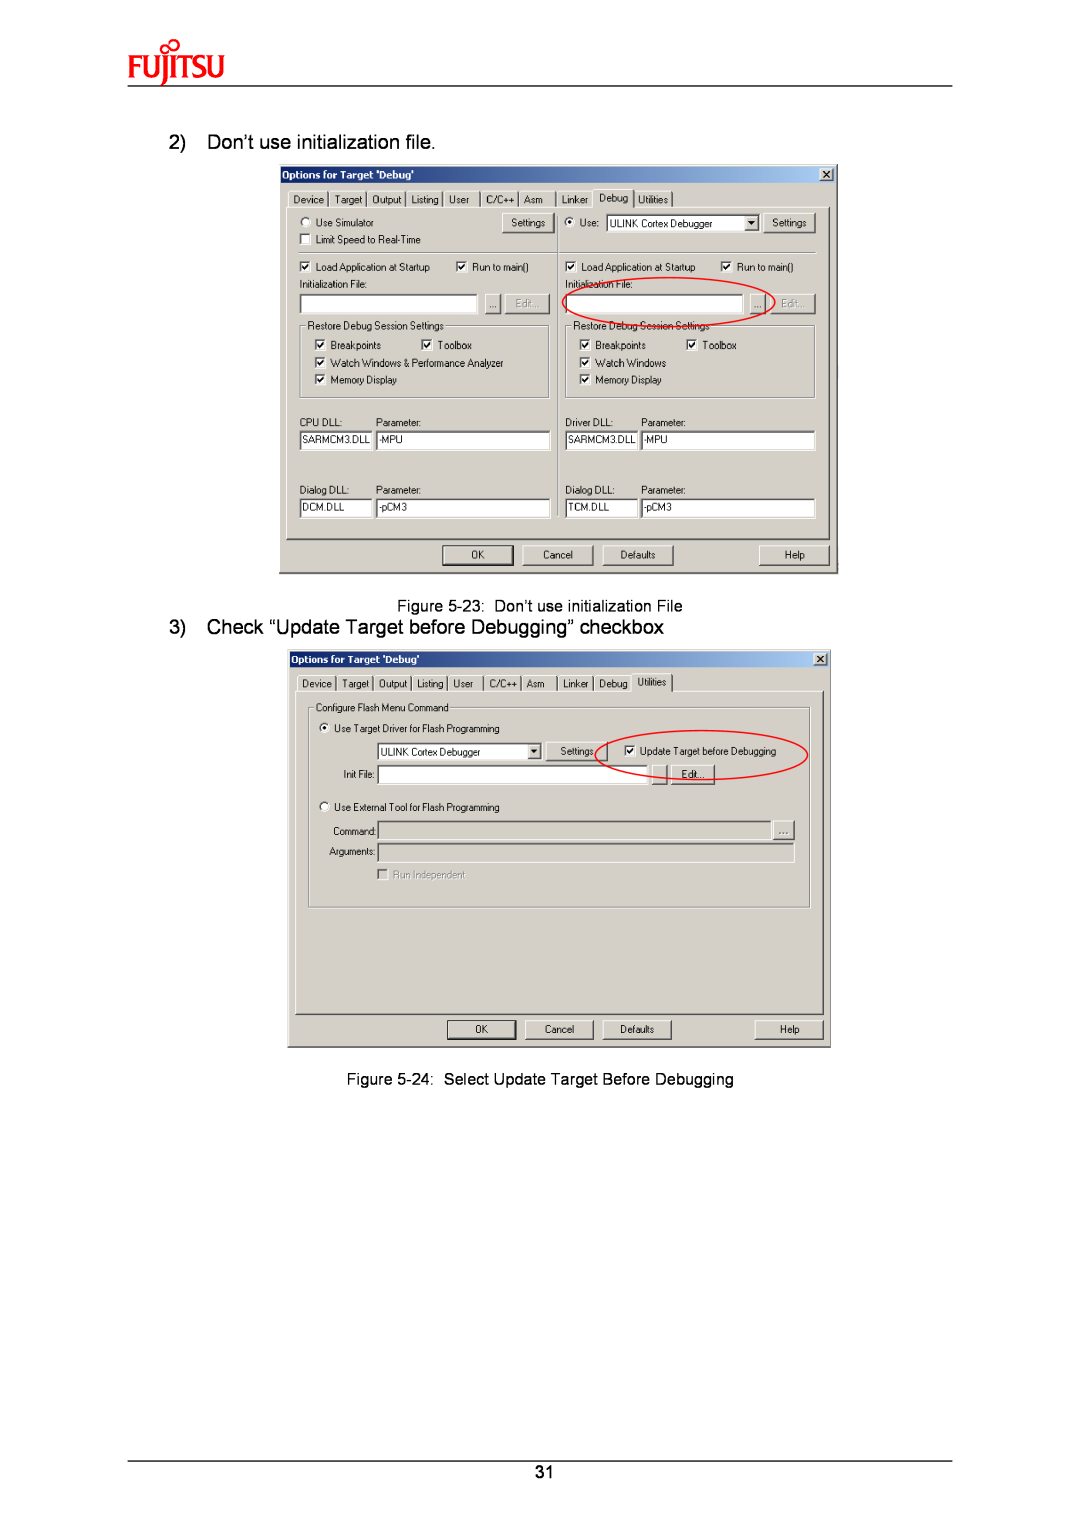 Fujitsu MB9B500 Series user manual 2 Don’t use initialization file, Check “Update Target before Debugging” checkbox 